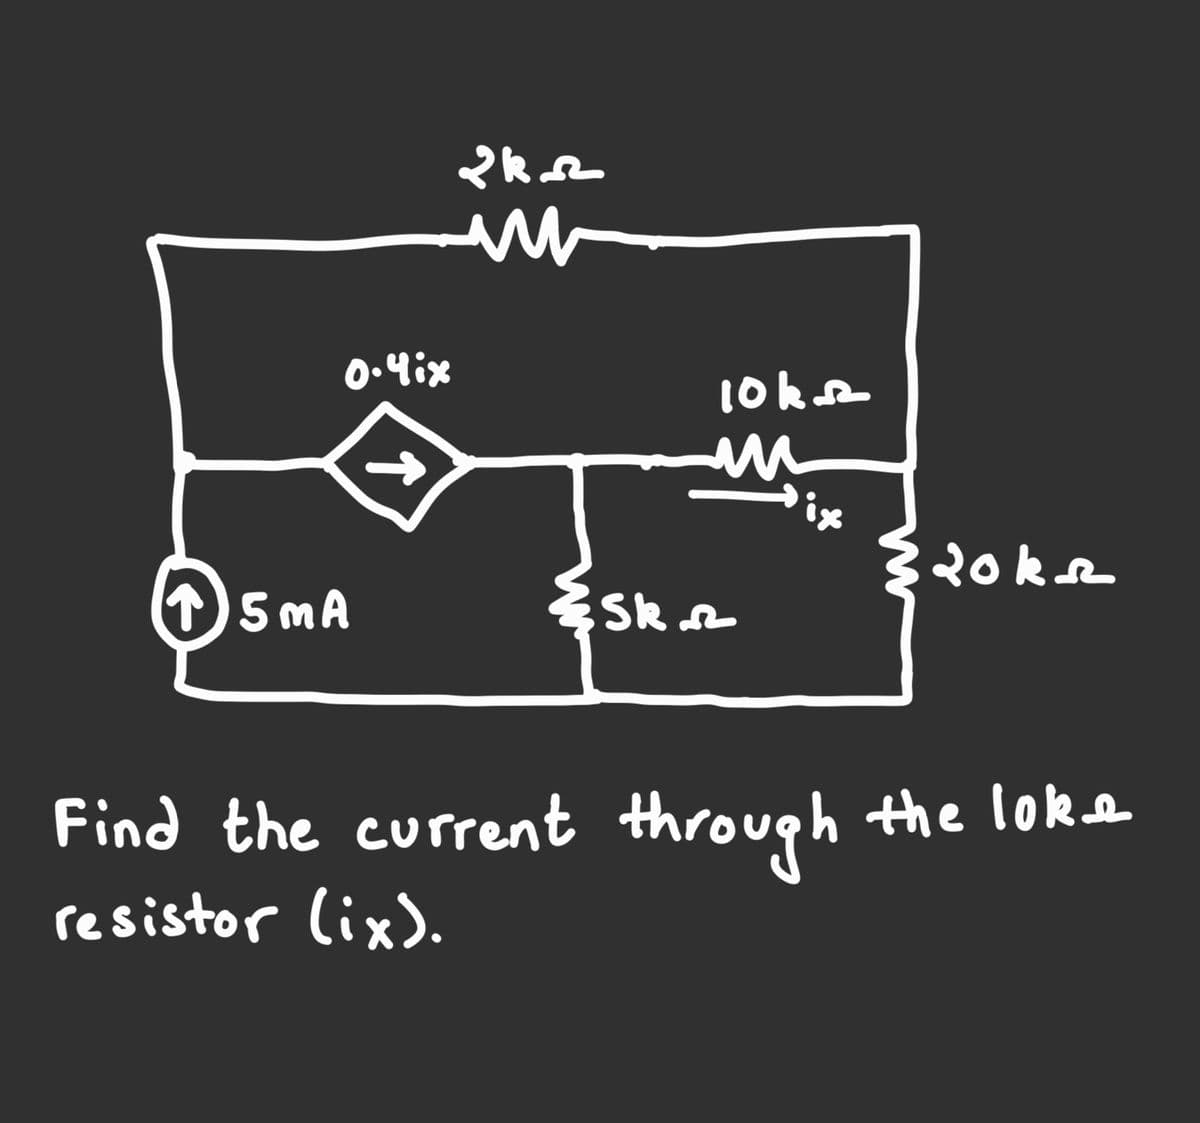 2k_2
0.41x
10k sz
m
↑ 5MA
Skrz
Find the current through
resistor (ix).
20k
the loke